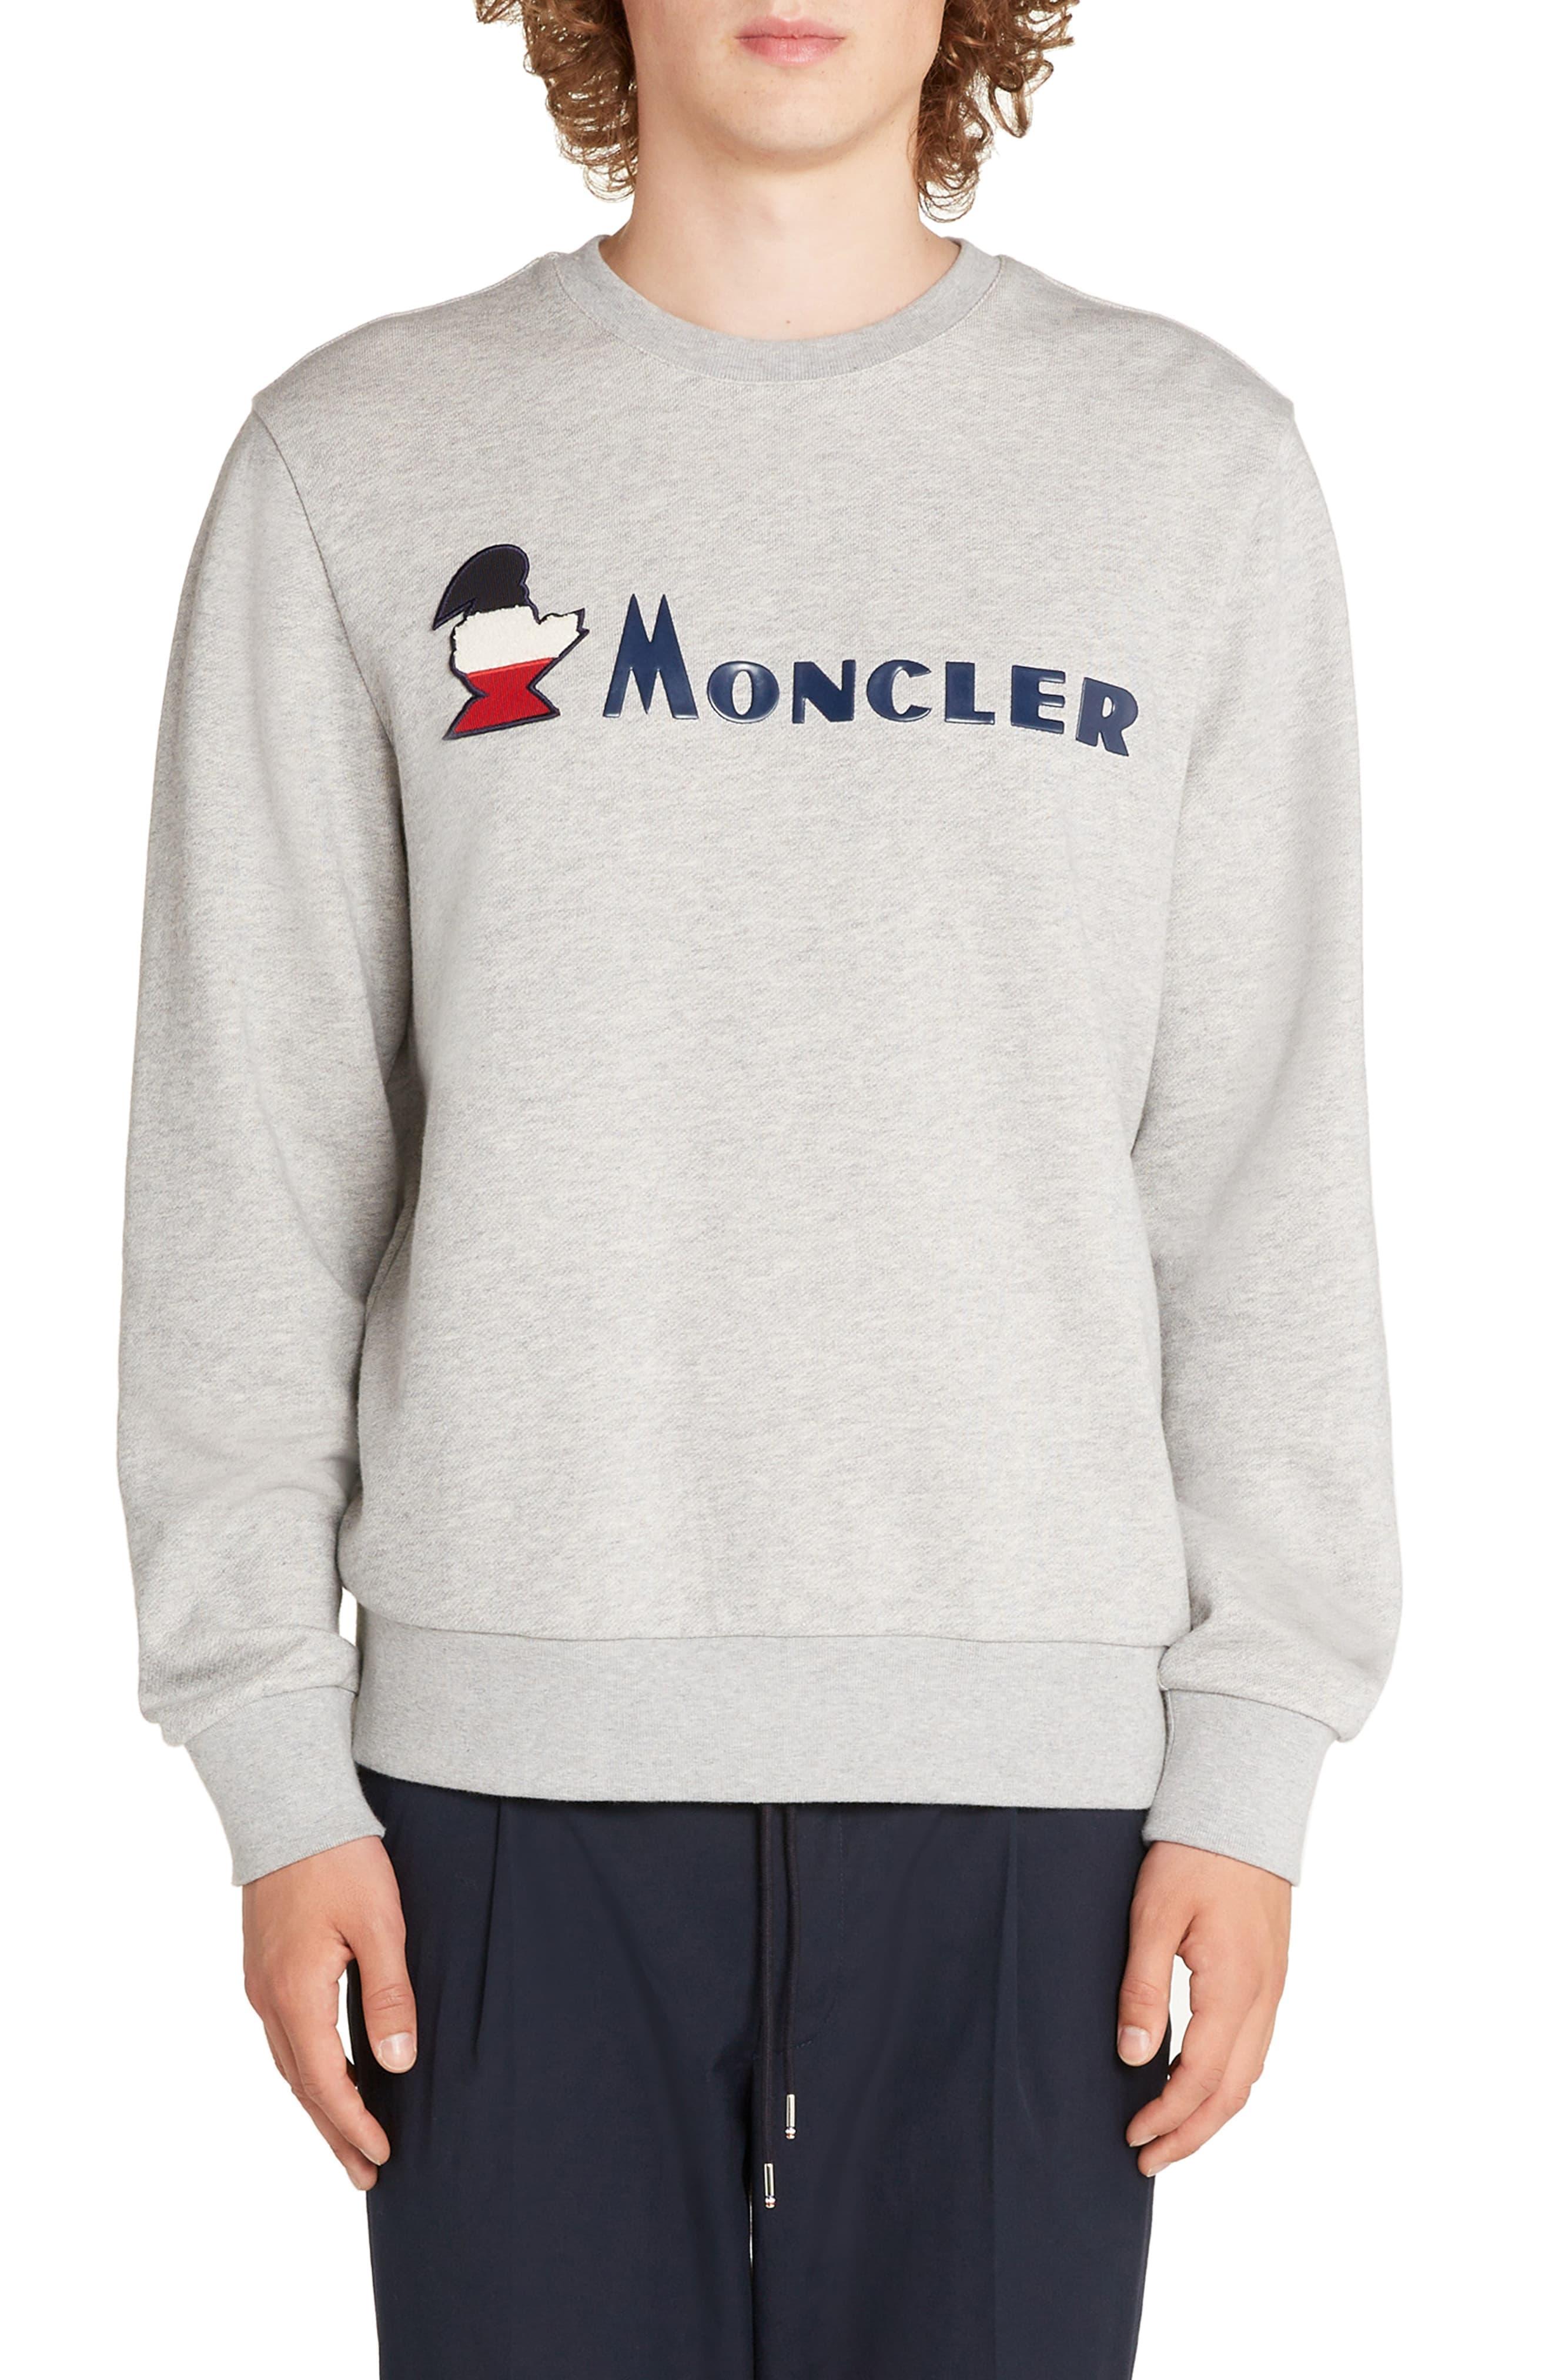 Moncler Logo Crewneck Sweatshirt in Dark Grey (Gray) for Men - Lyst